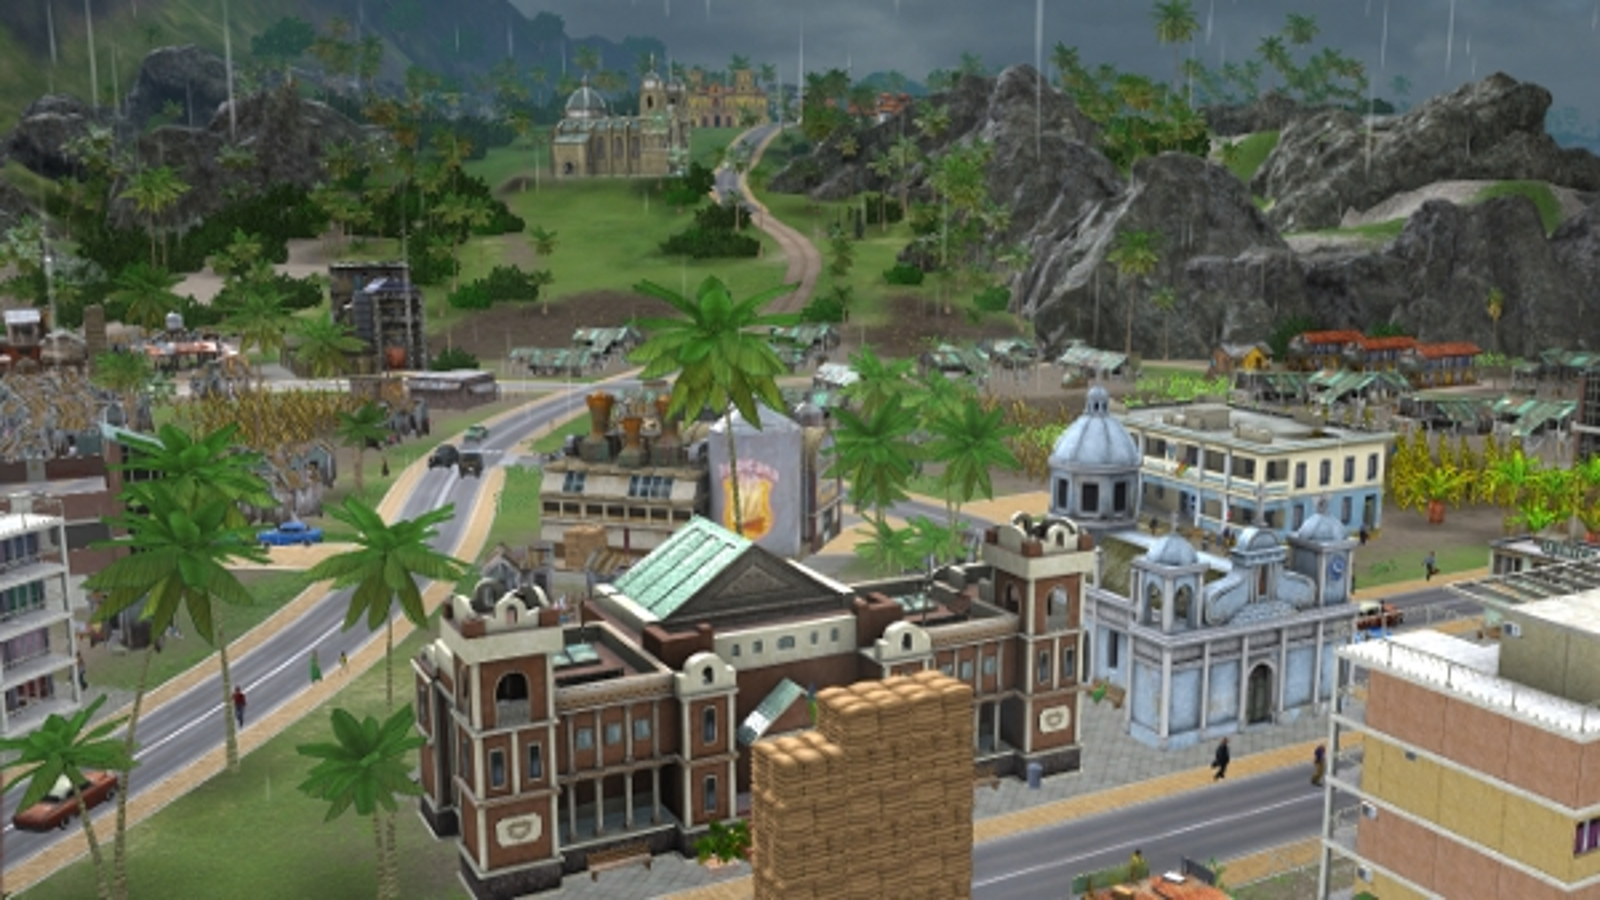 Tropico 4 (Xbox 360) Review